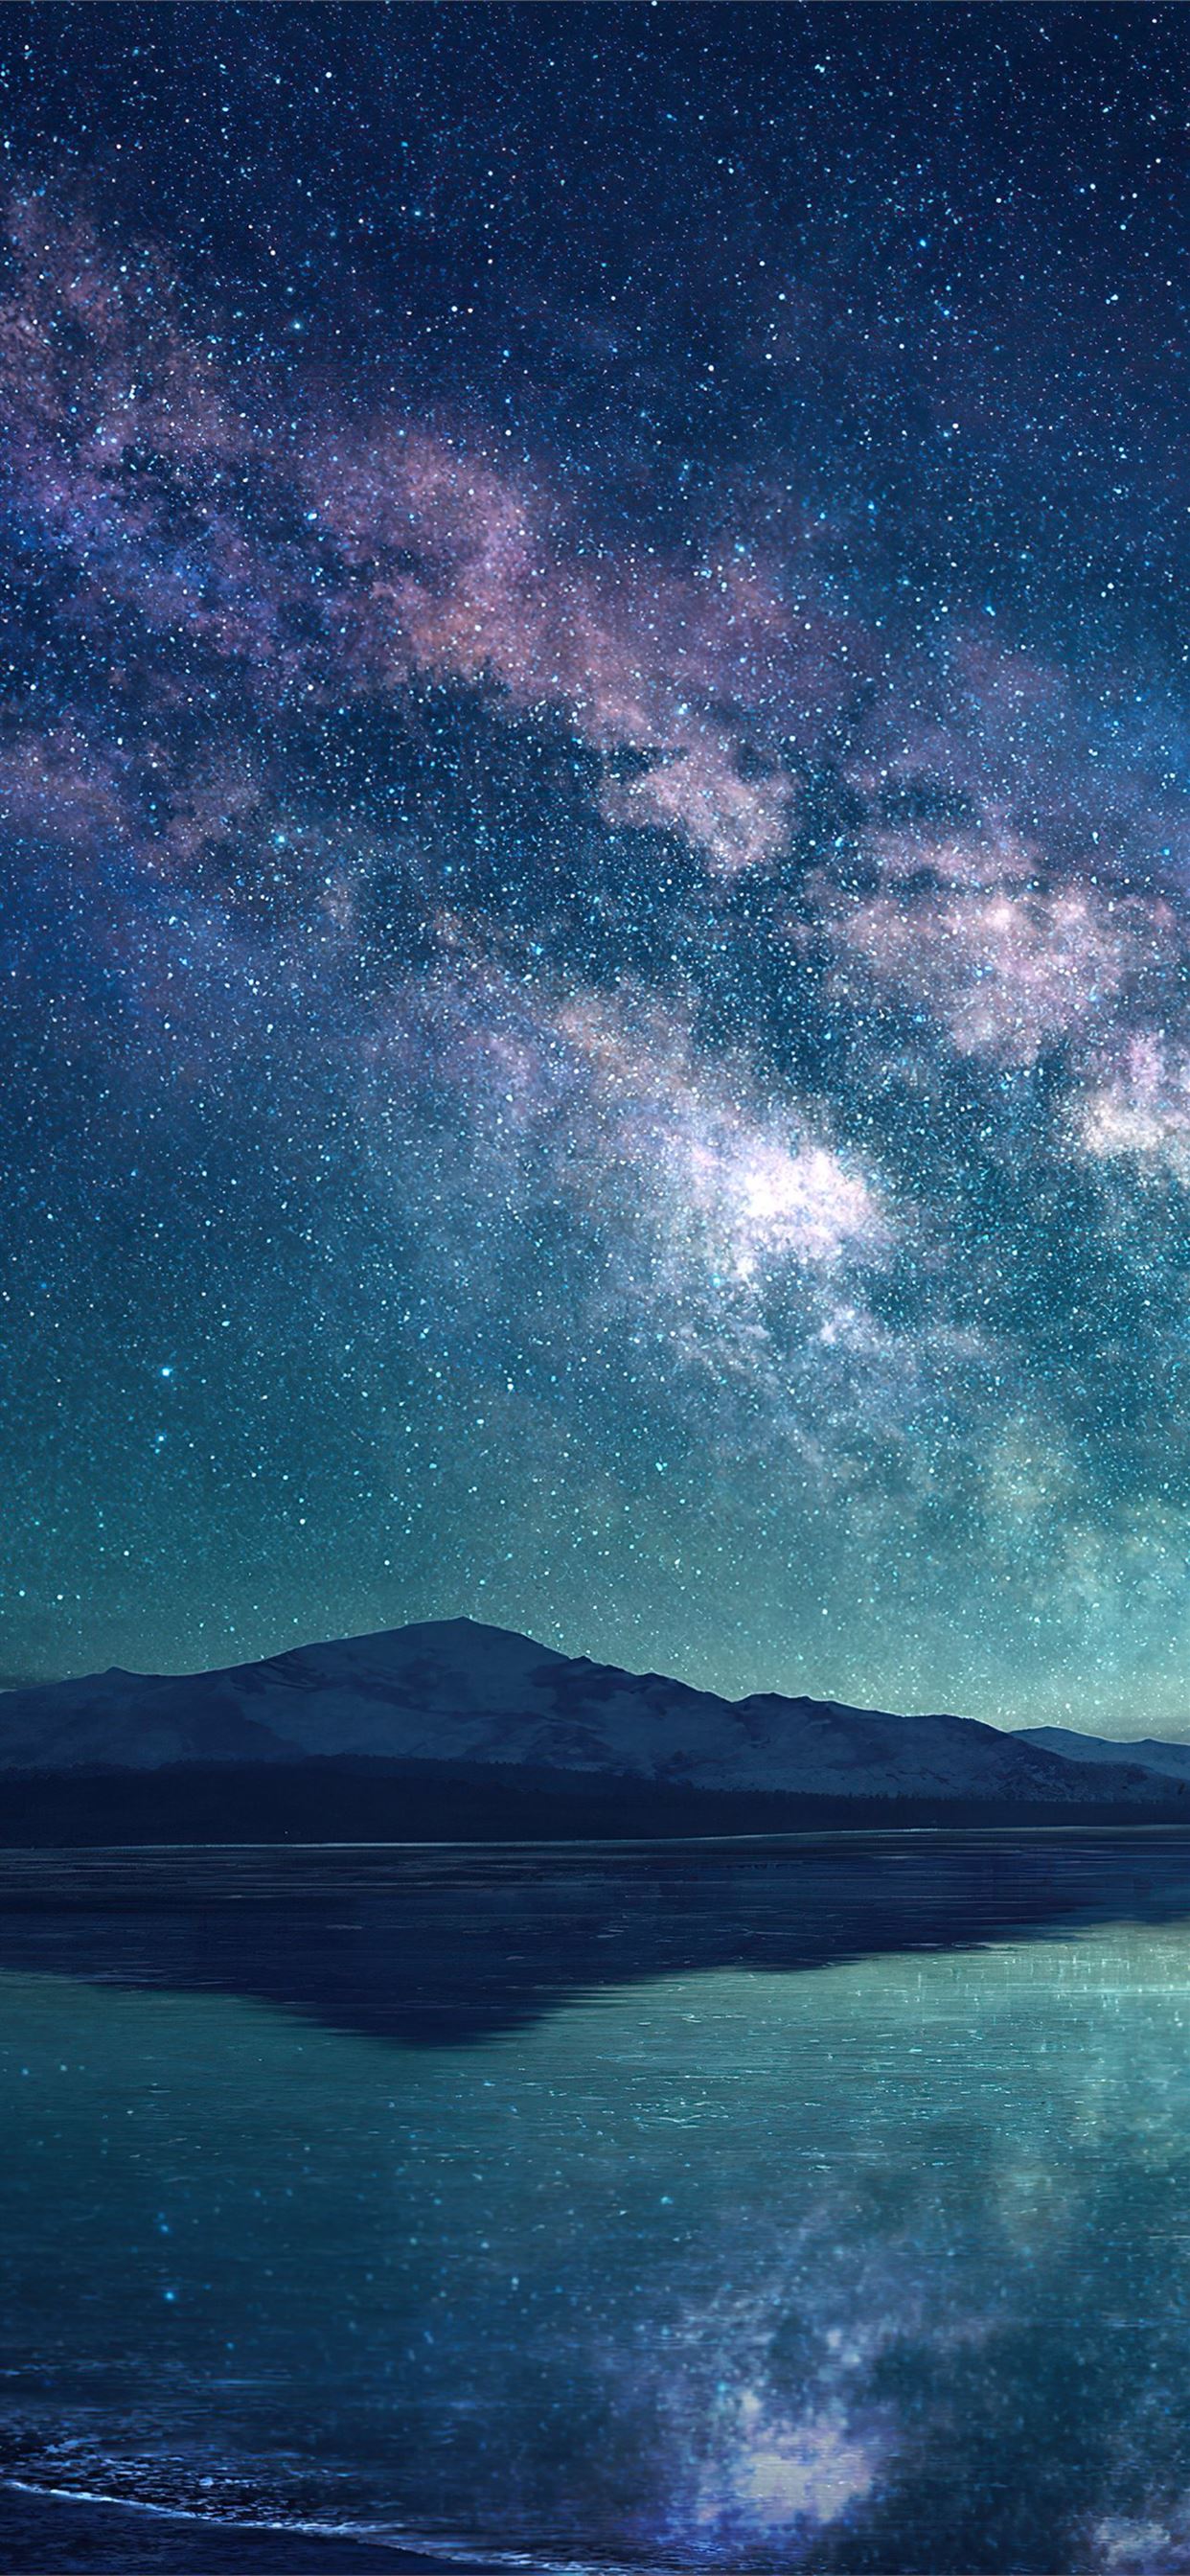 Download wallpaper 3840x2400 starry sky milky way night shining galaxy  4k ultra hd 1610 hd background